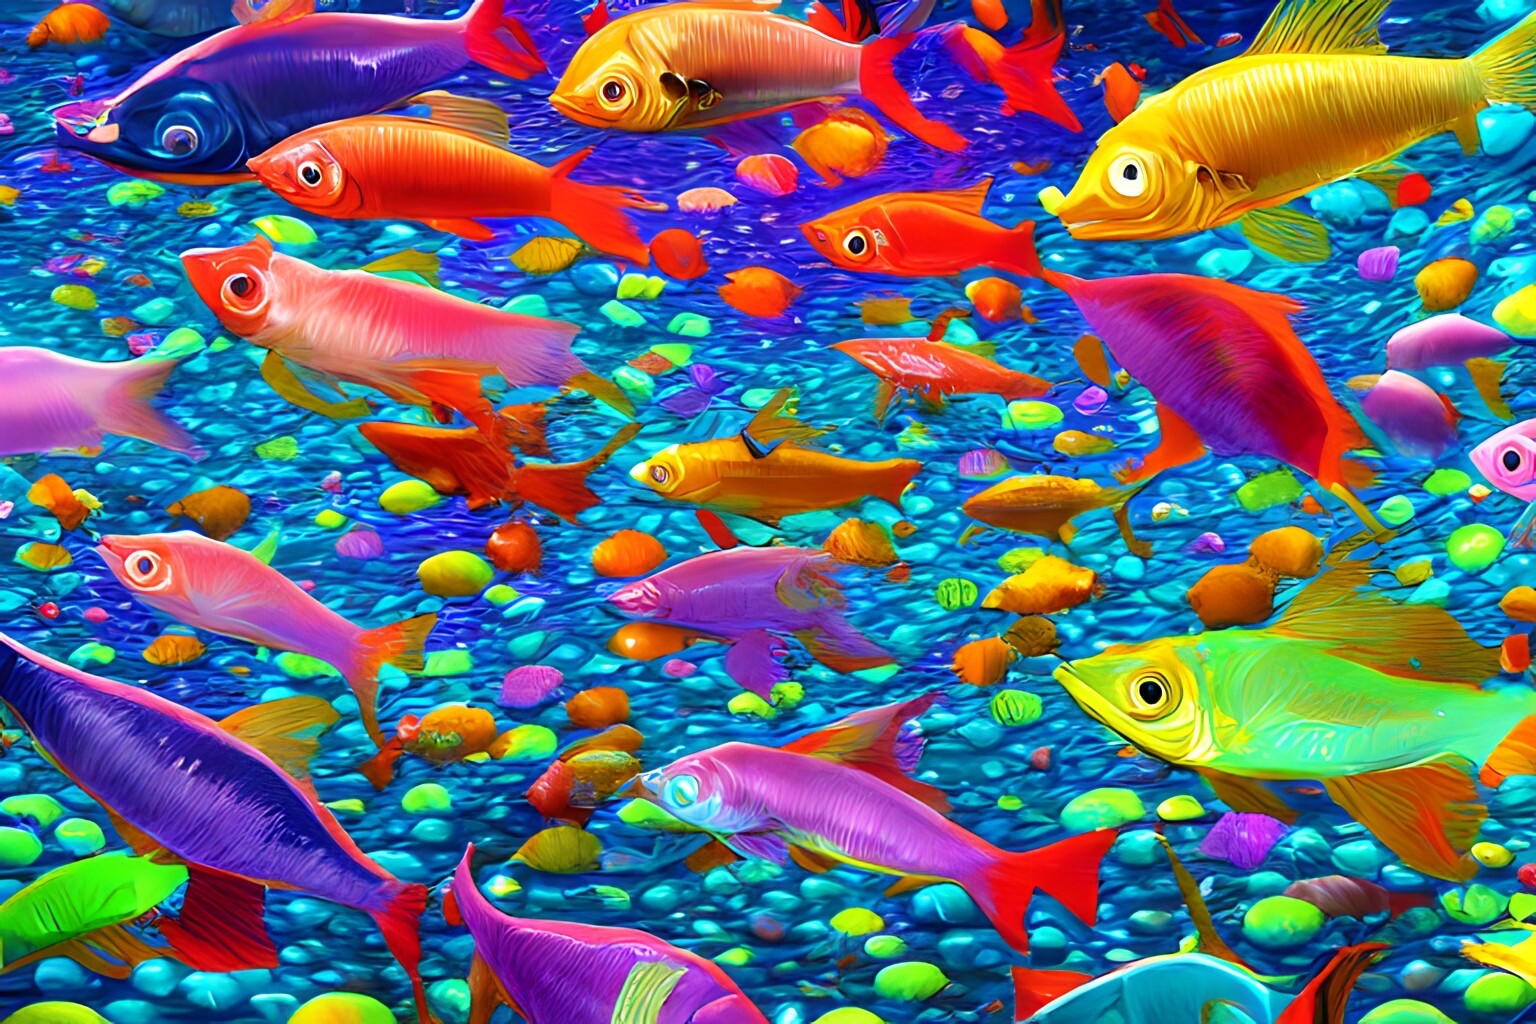 ArtStation - Beautiful Fish Imagery